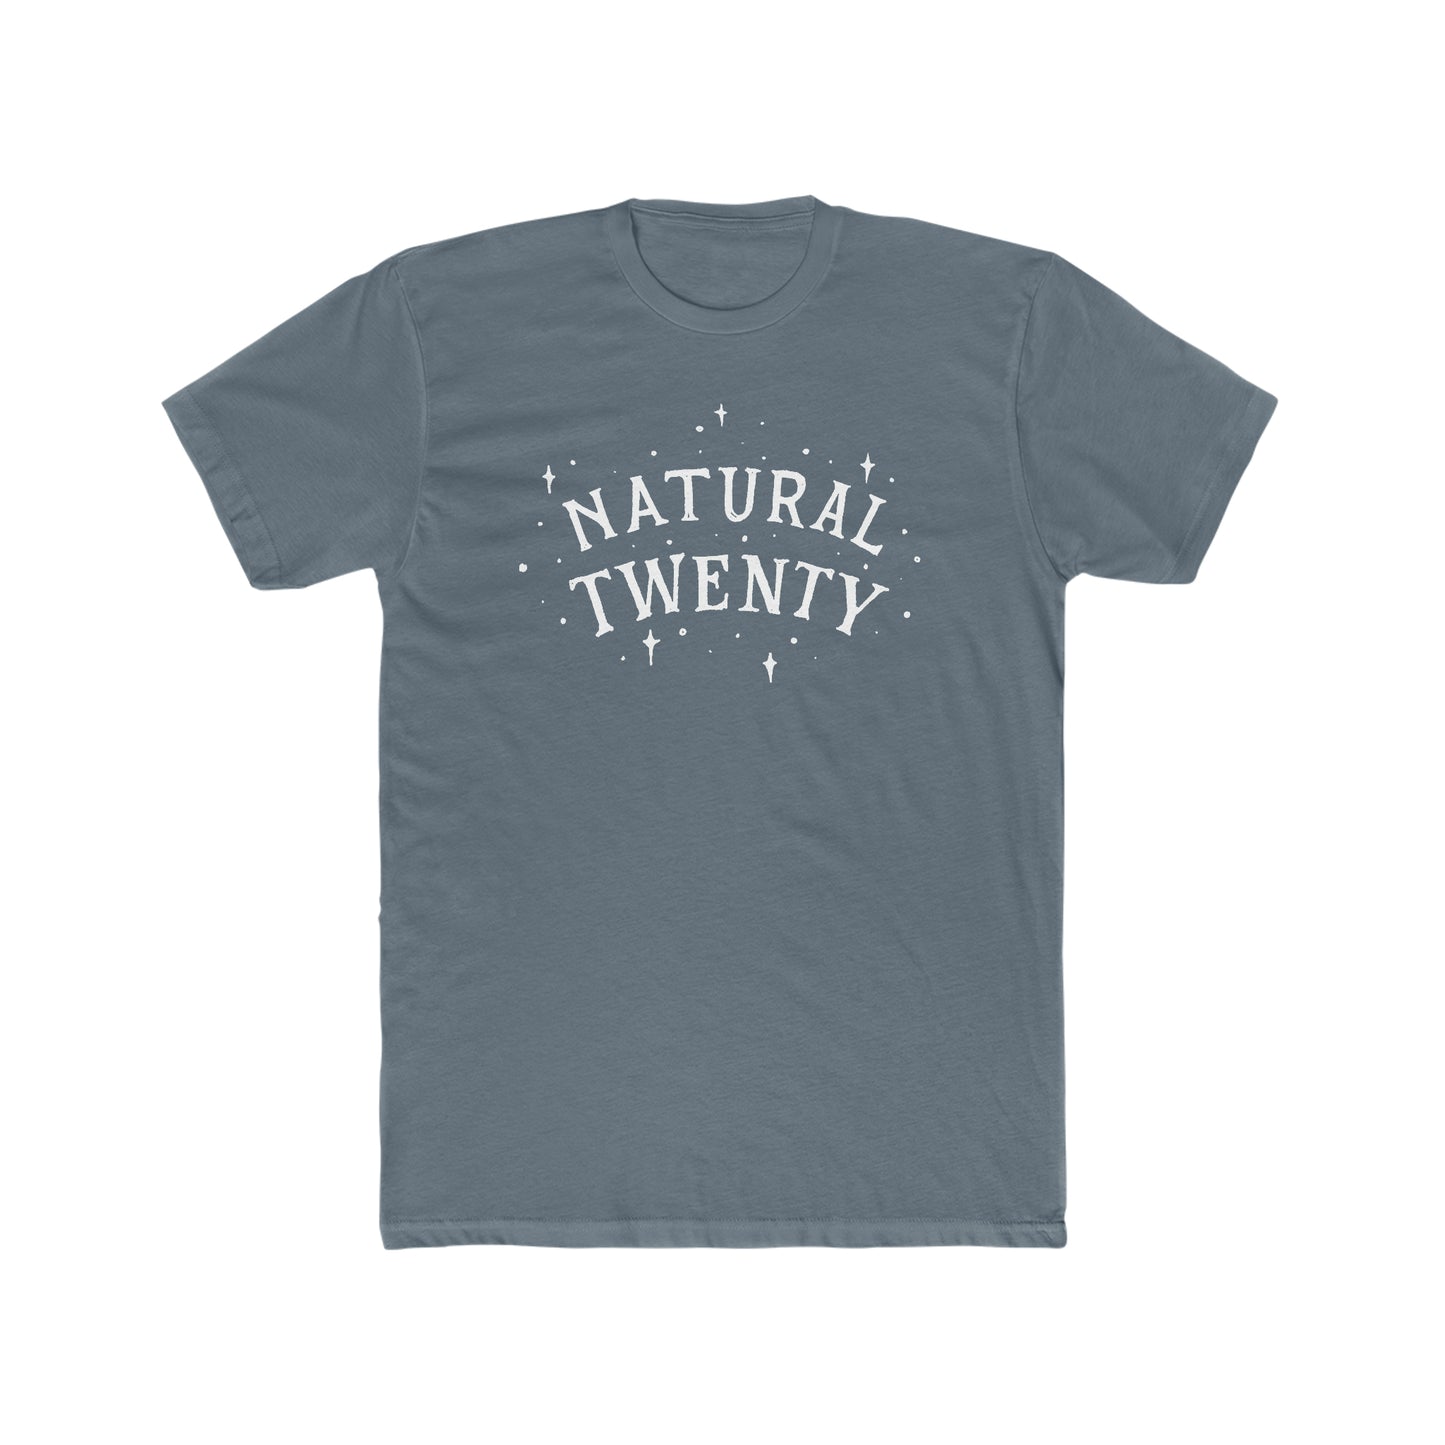 Natural Twenty — Tabletop Type Tee